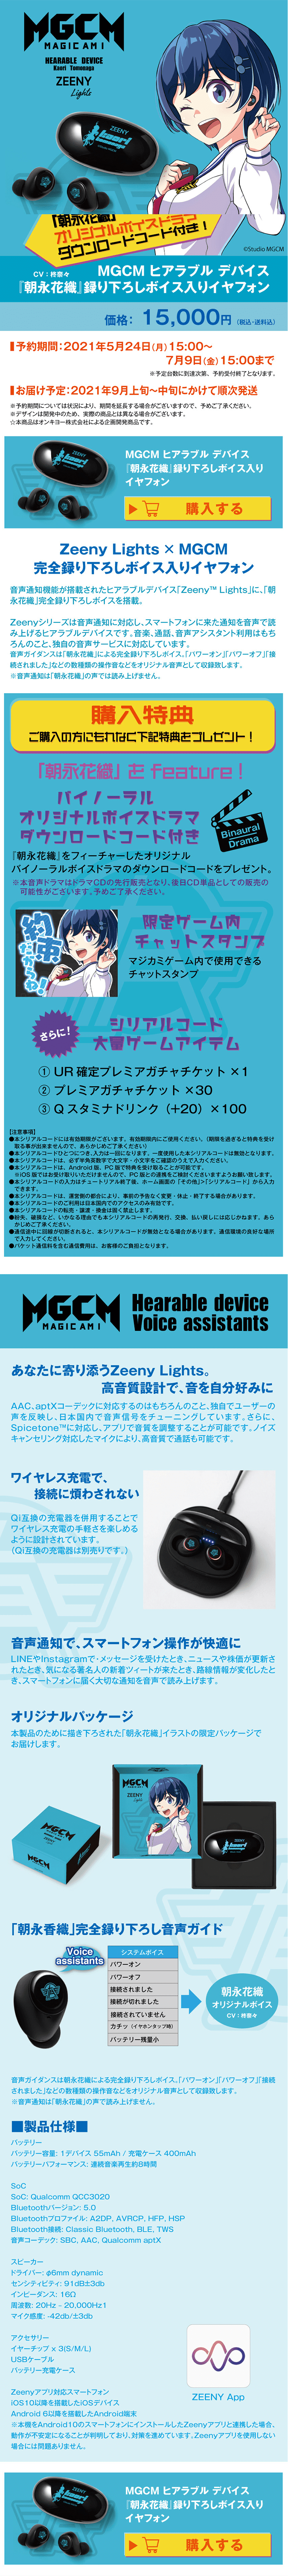 Zeeny Lights ワイヤレスイヤフォン MGCM コラボモデル_pc_1